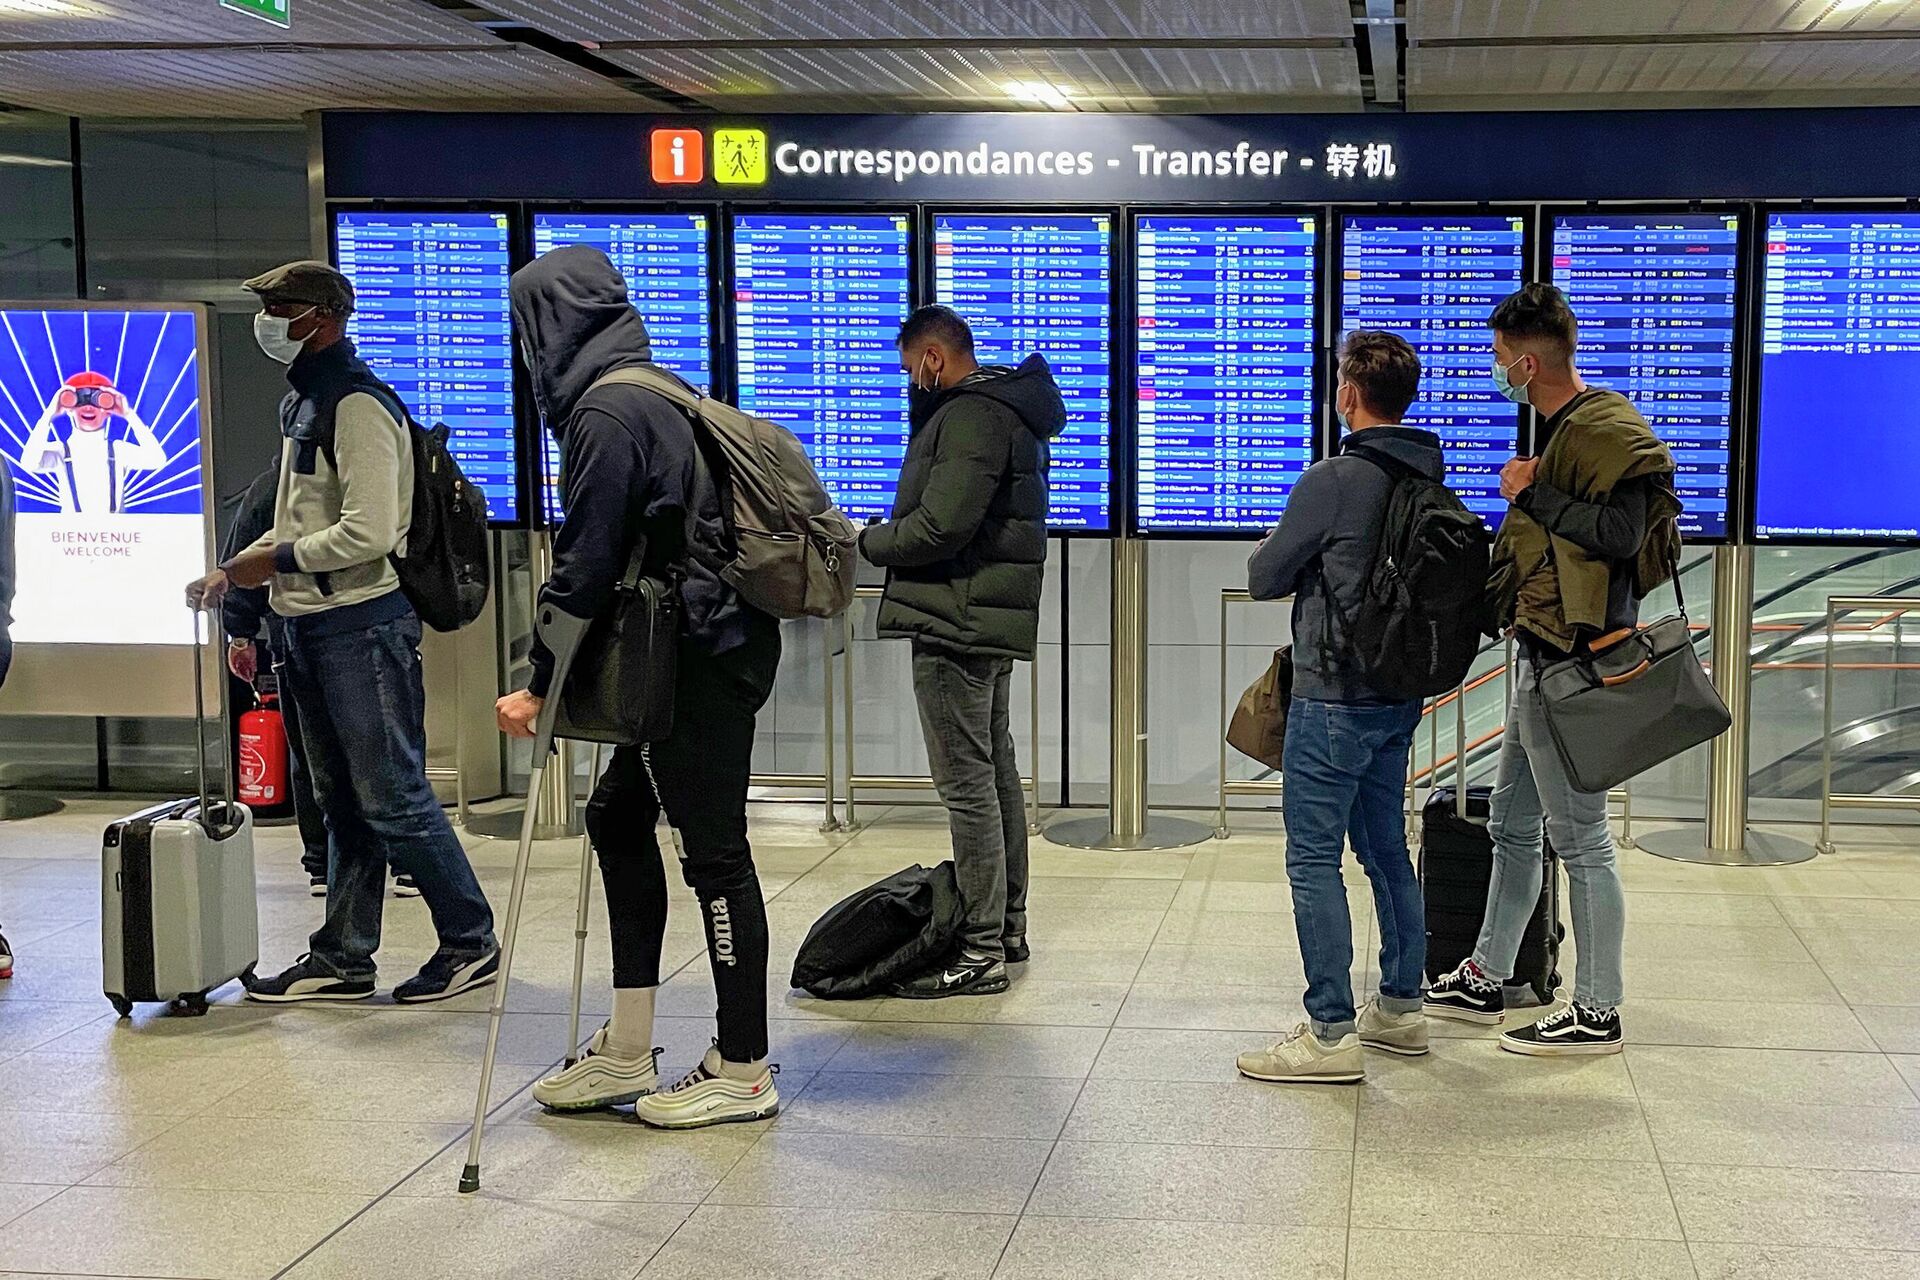 Transit passengers wait in line upon their arrival at Paris Charles de Gaulle airport Tuesday Dec. 22, 2020 - Sputnik International, 1920, 17.12.2021